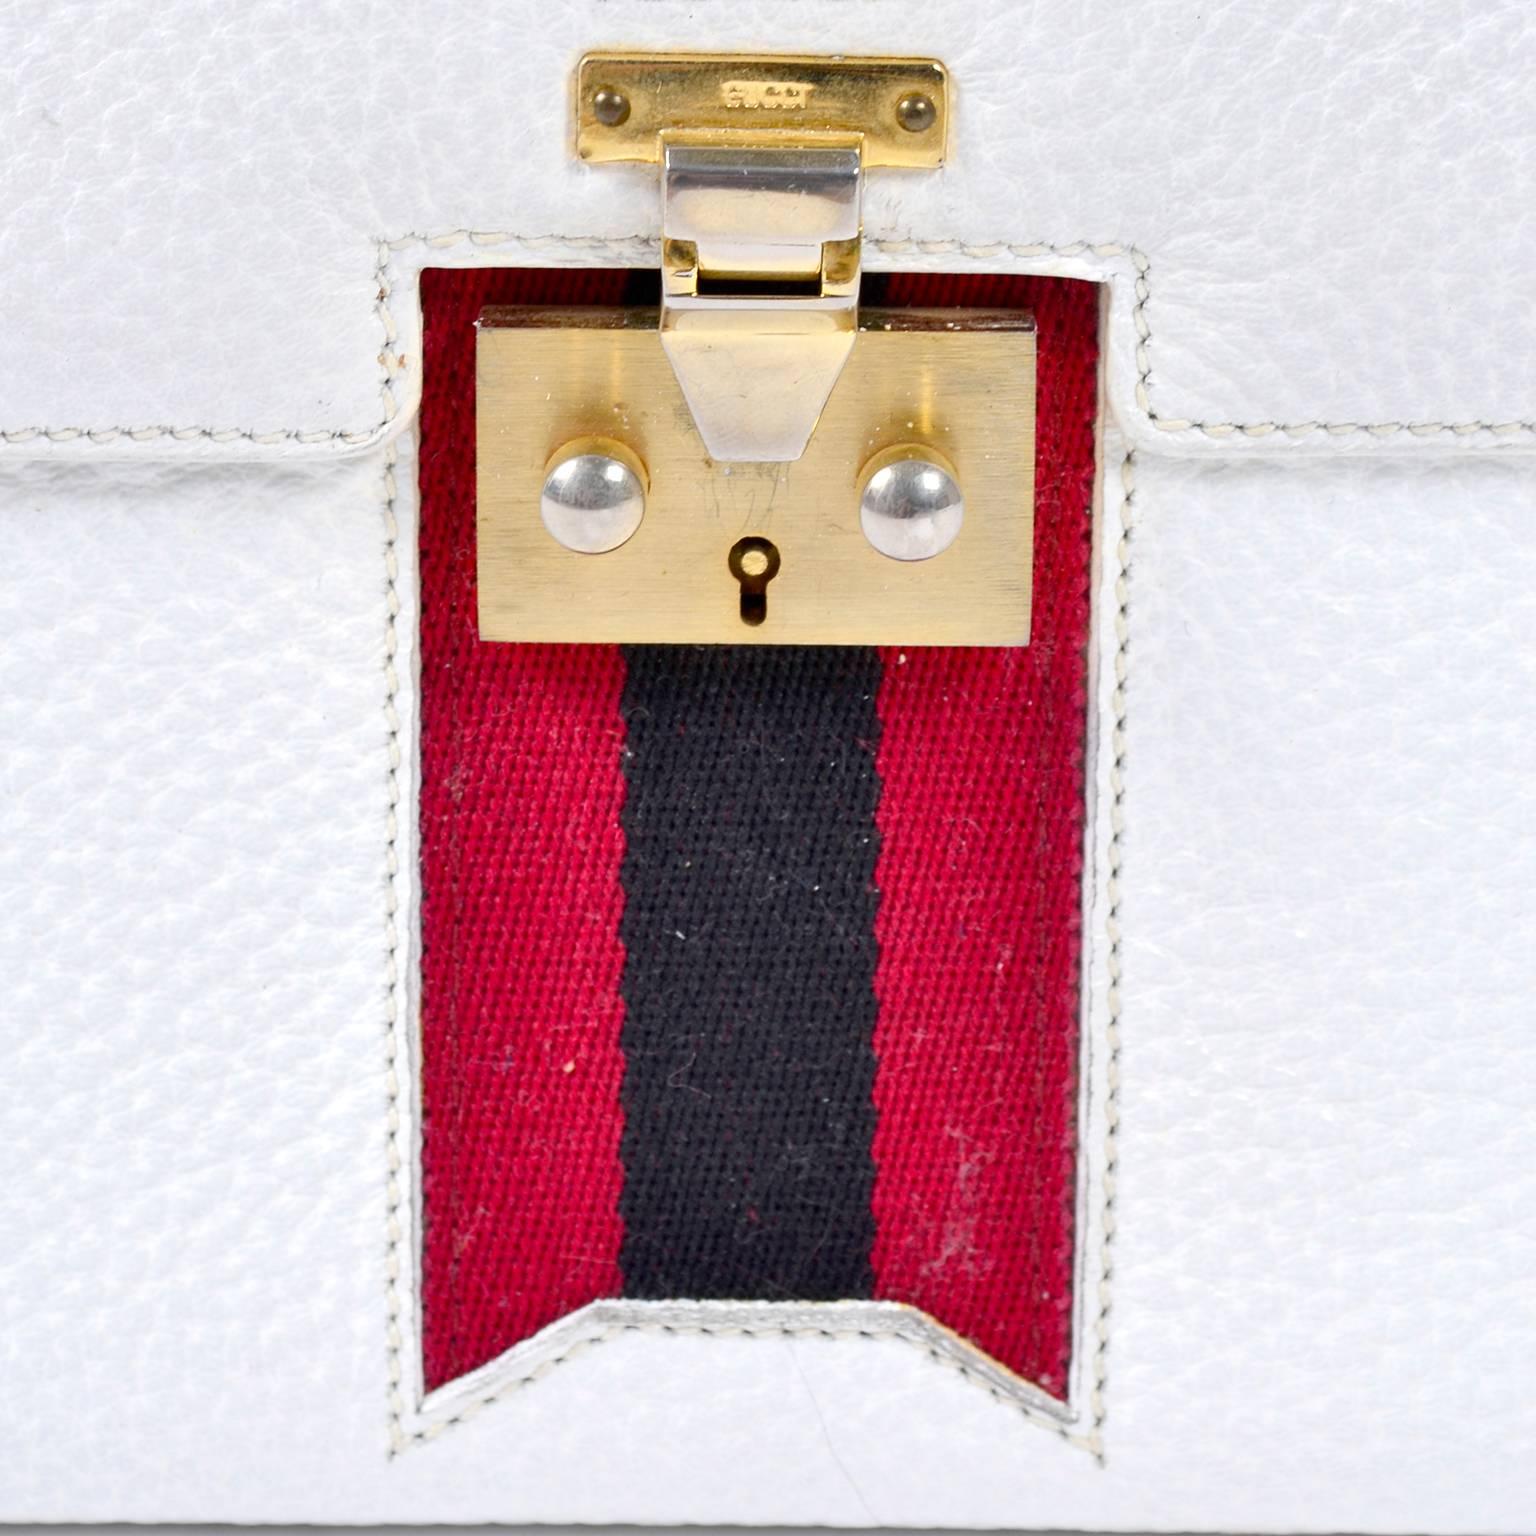 Vintage White Gucci Handbag Satchel in Leather With Stripes & Key Lock 2